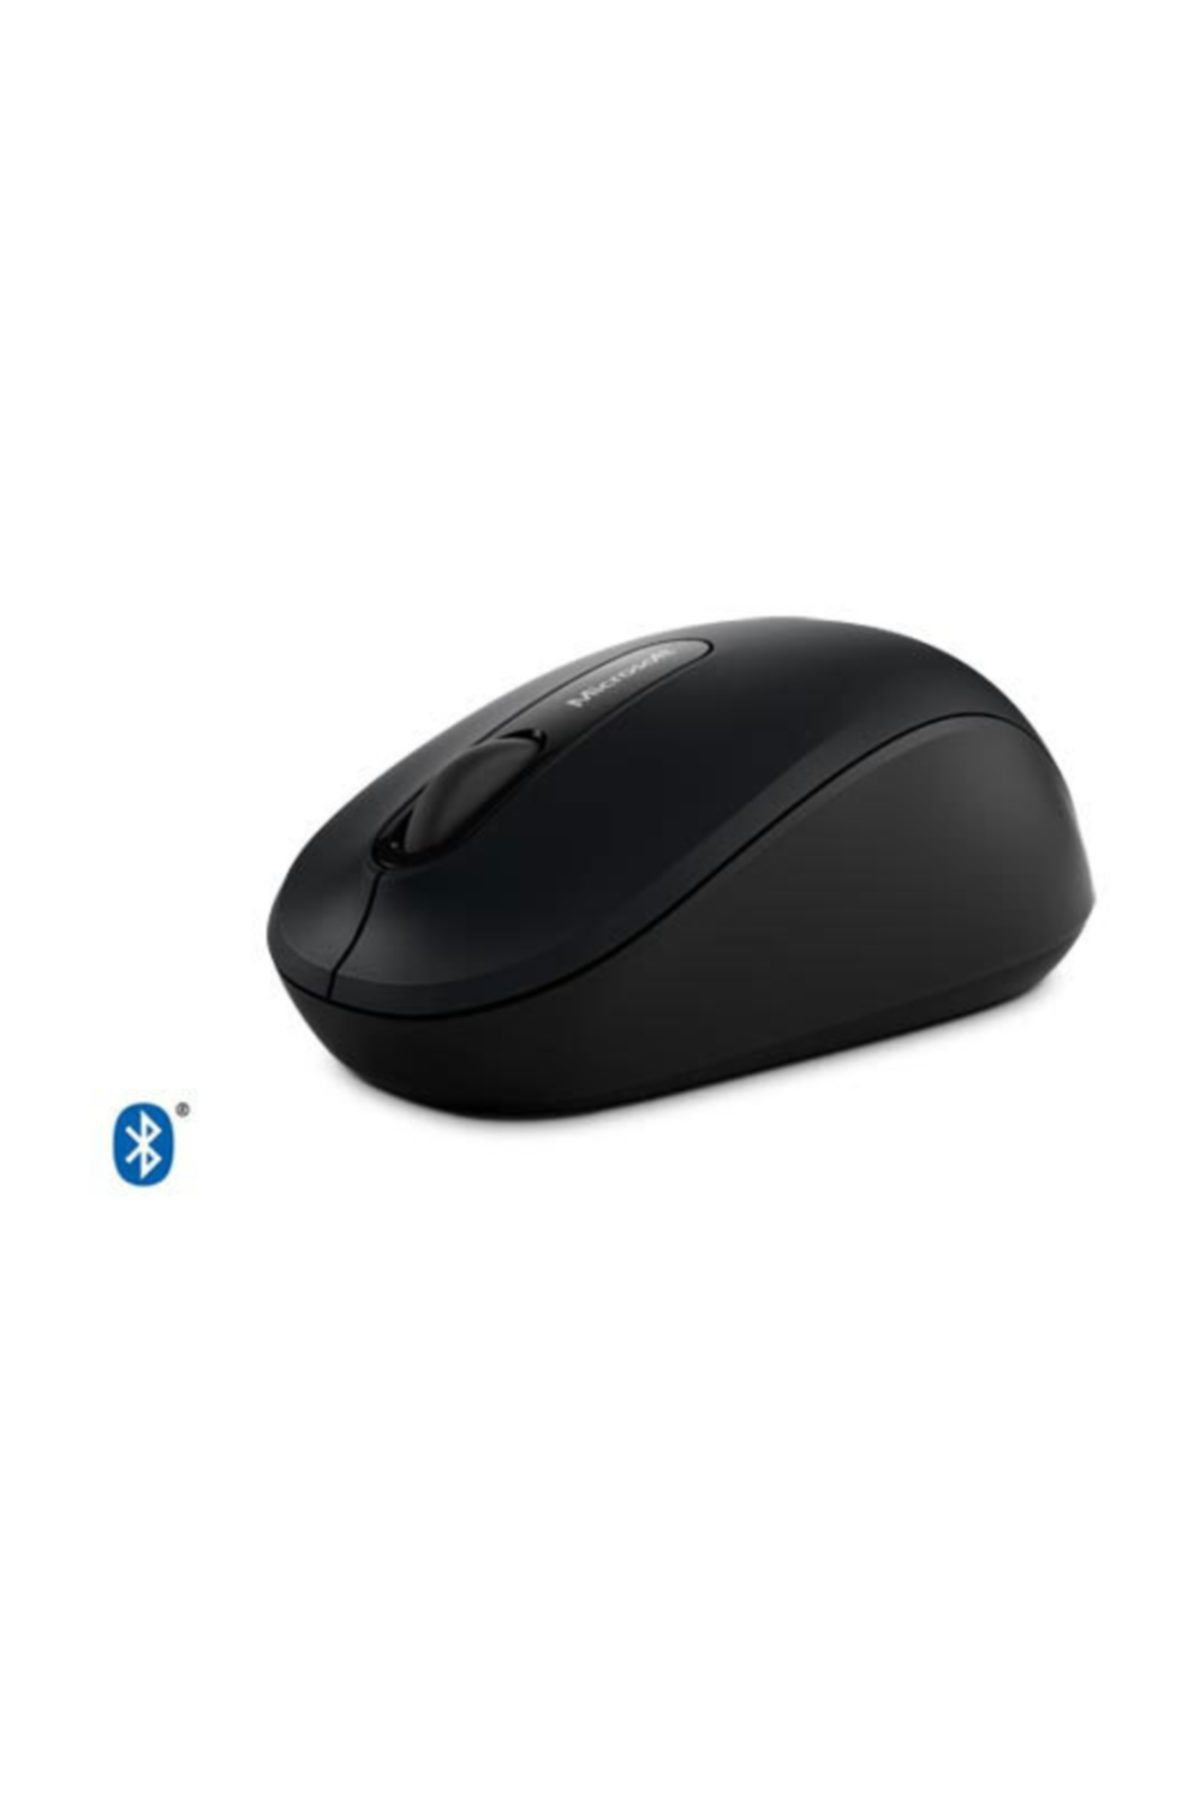 Microsoft Mıcrosoft Pn7-00003 Bluetooth Mouse 3600 Siyah